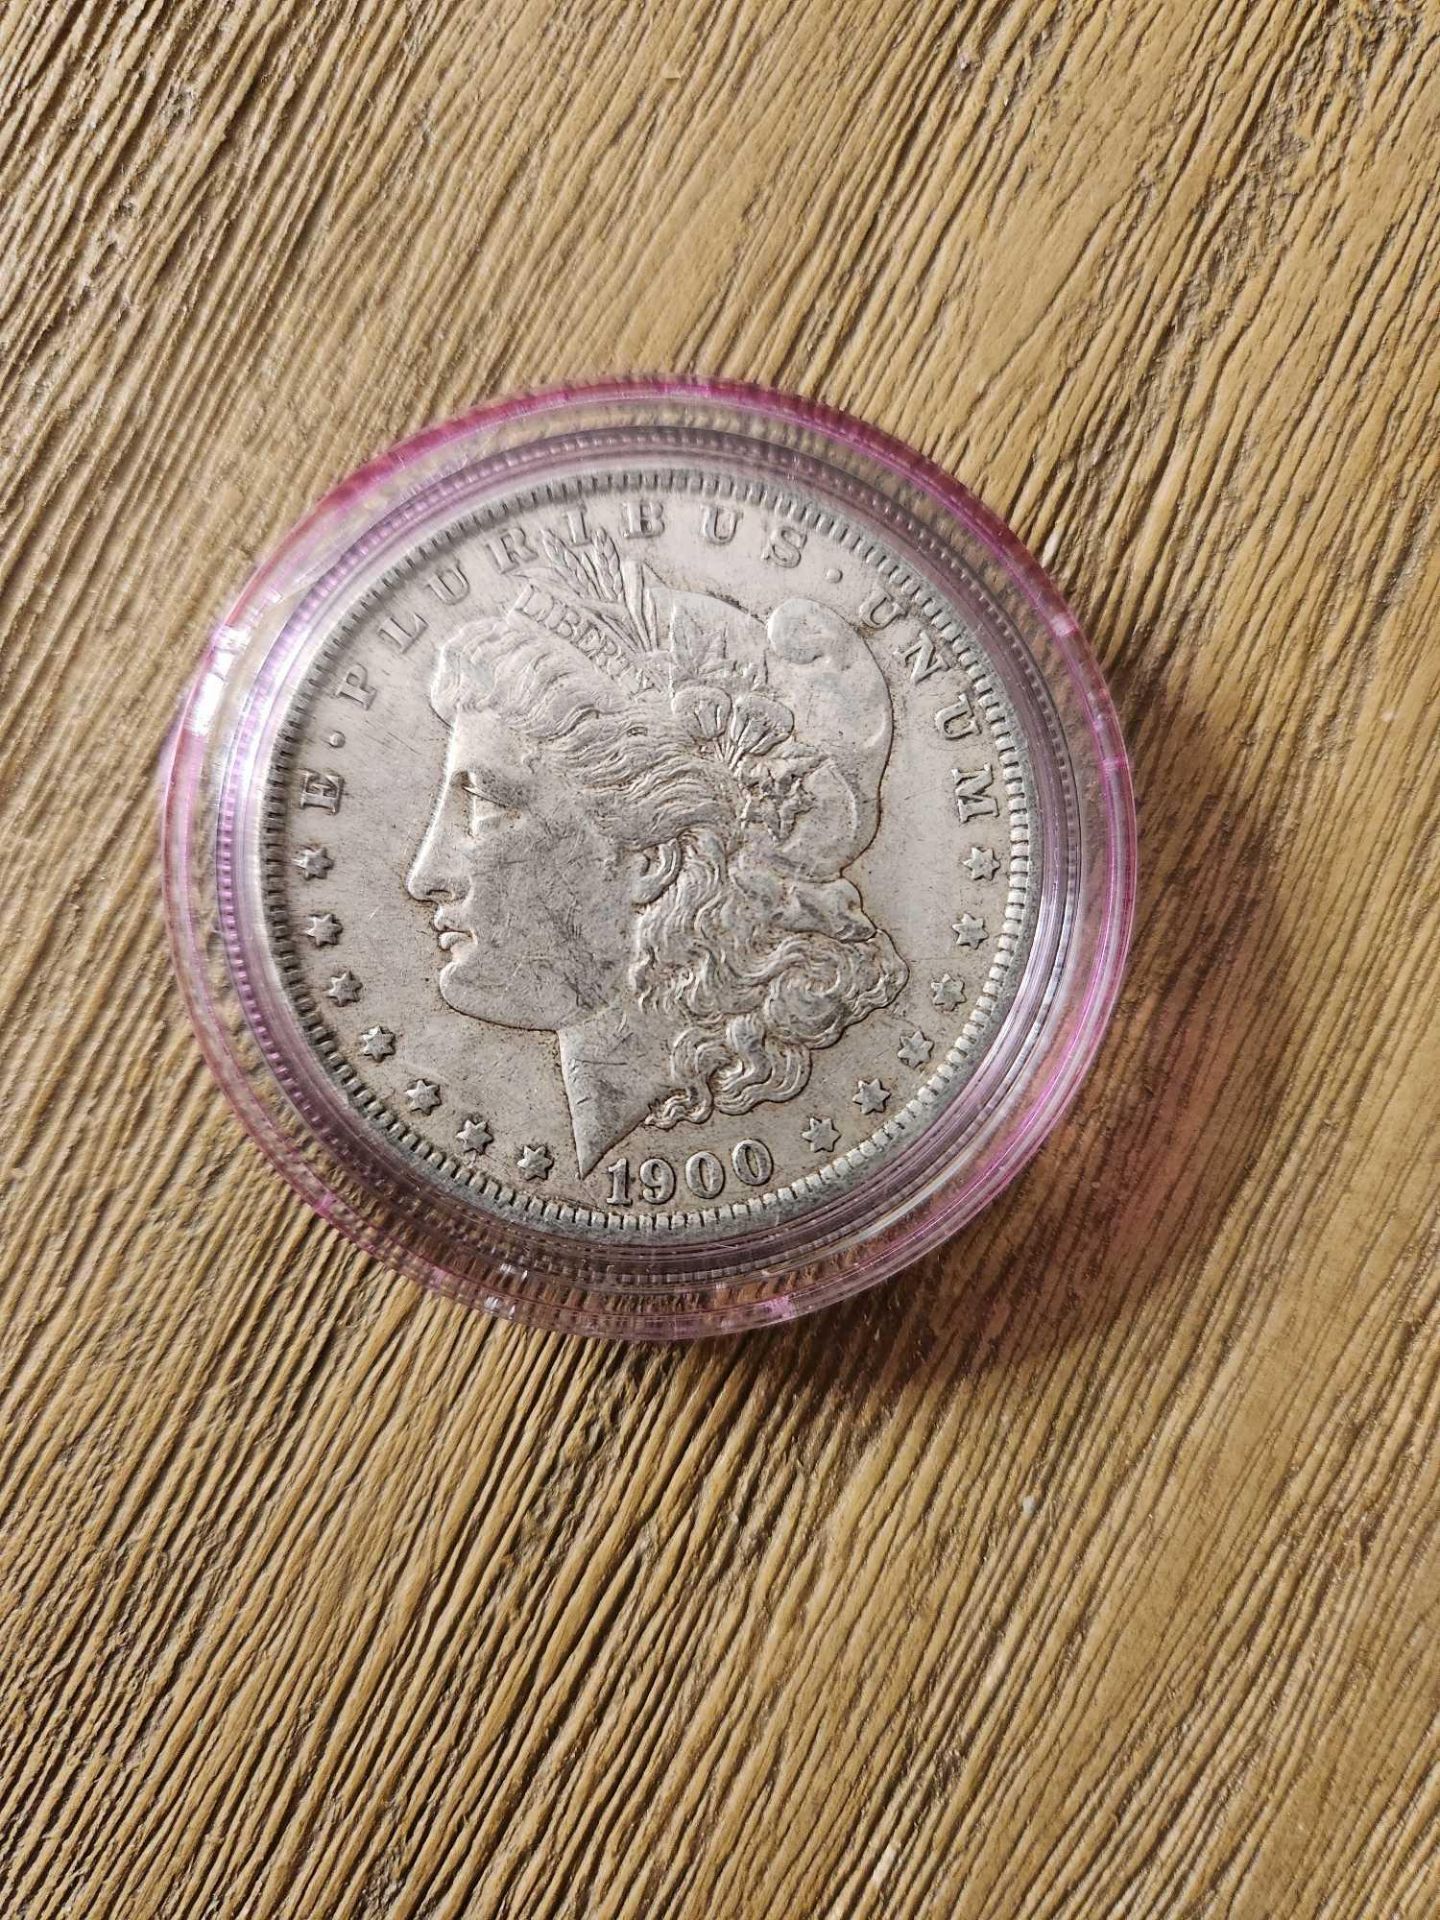 1900 AU Morgan Dollar - Image 2 of 2